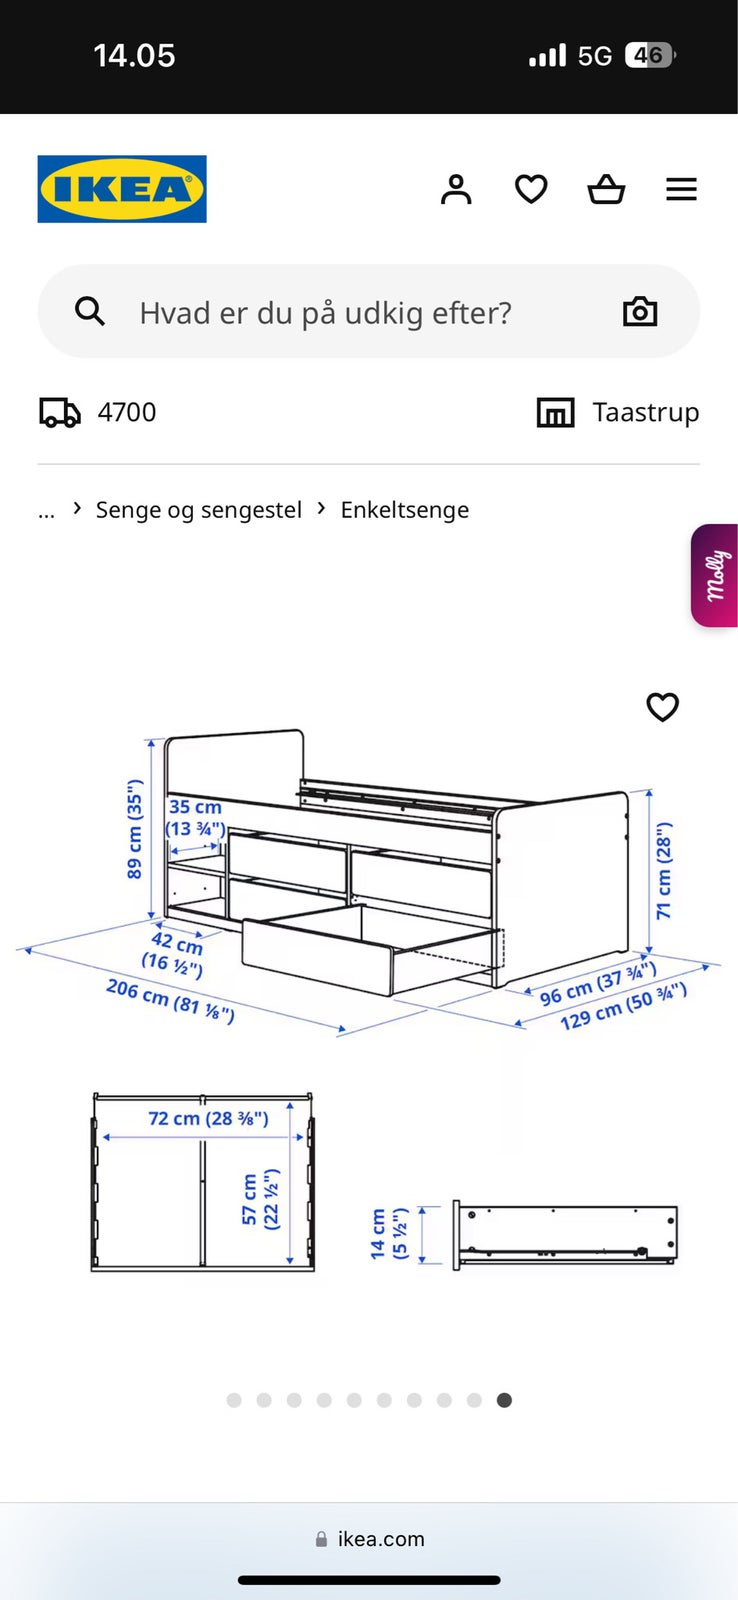 Enkeltseng, Ikea, b: 96 l: 206 h: 89